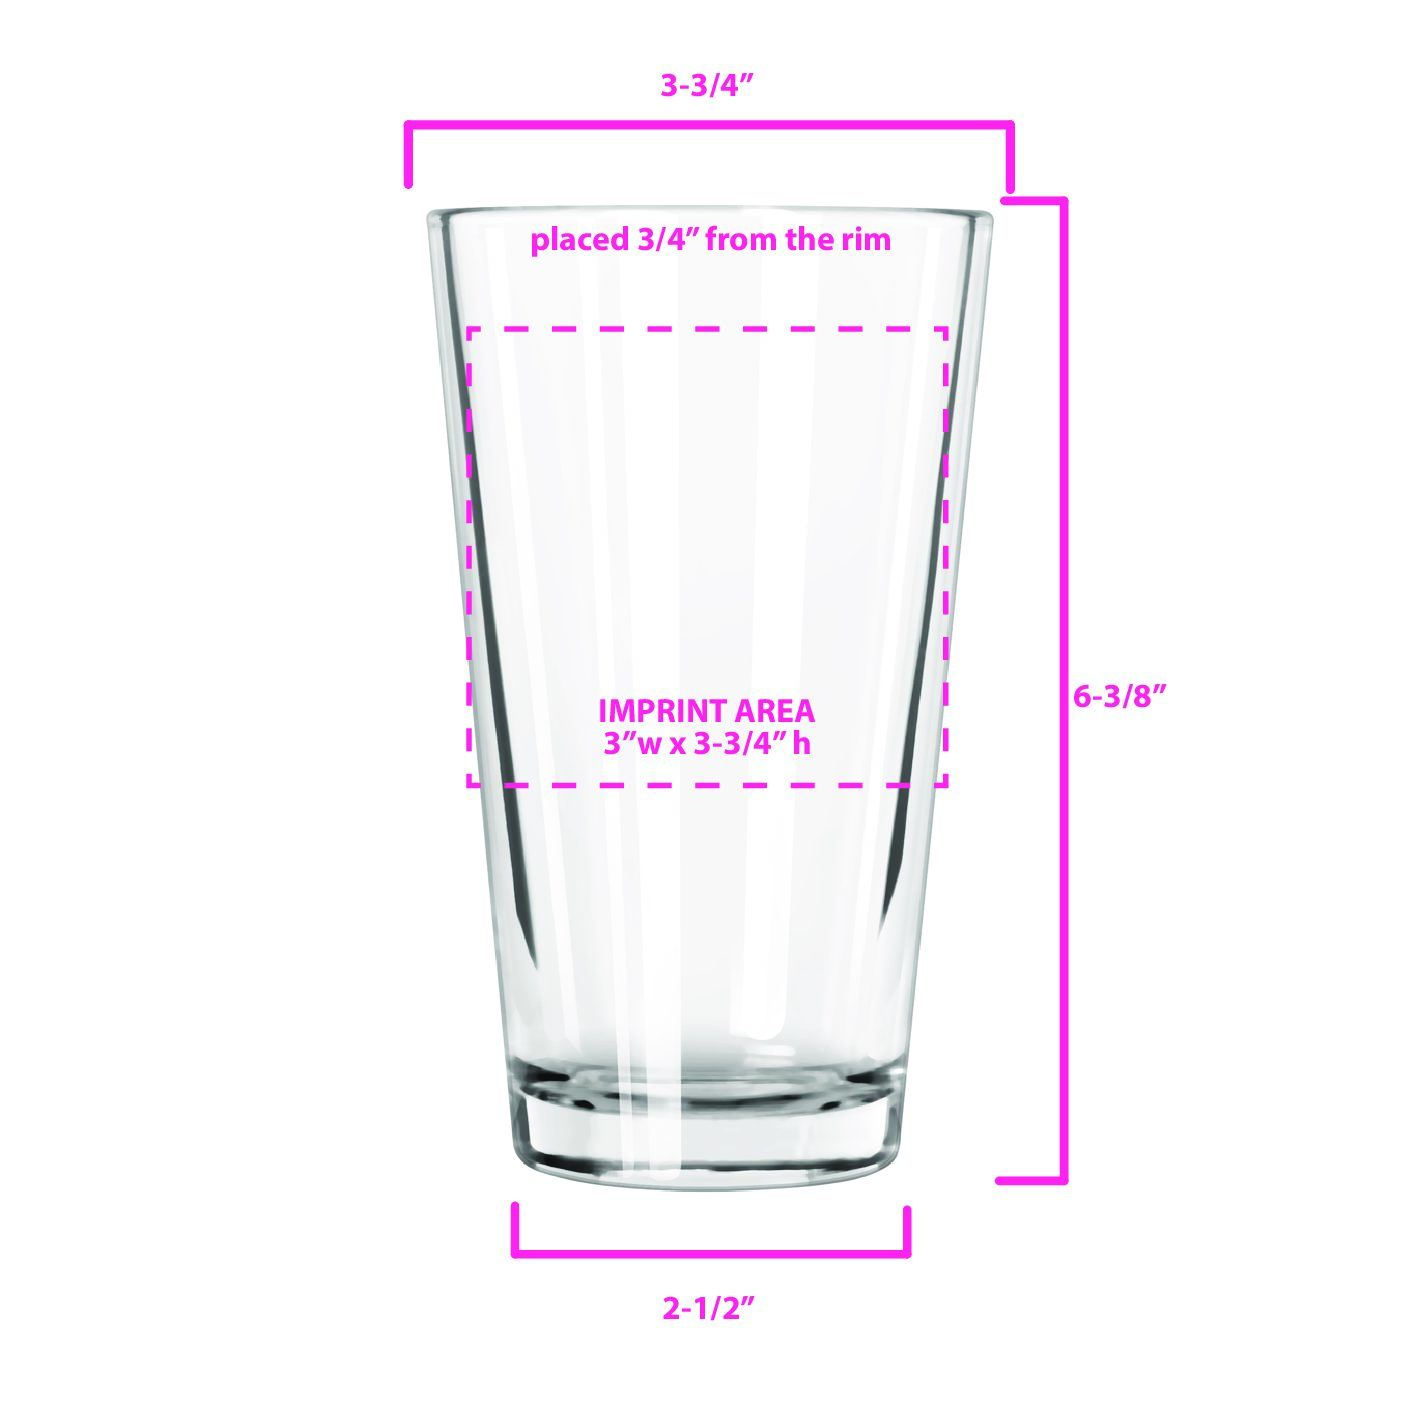 Libbey Pint Glass 20 oz. (#5137)